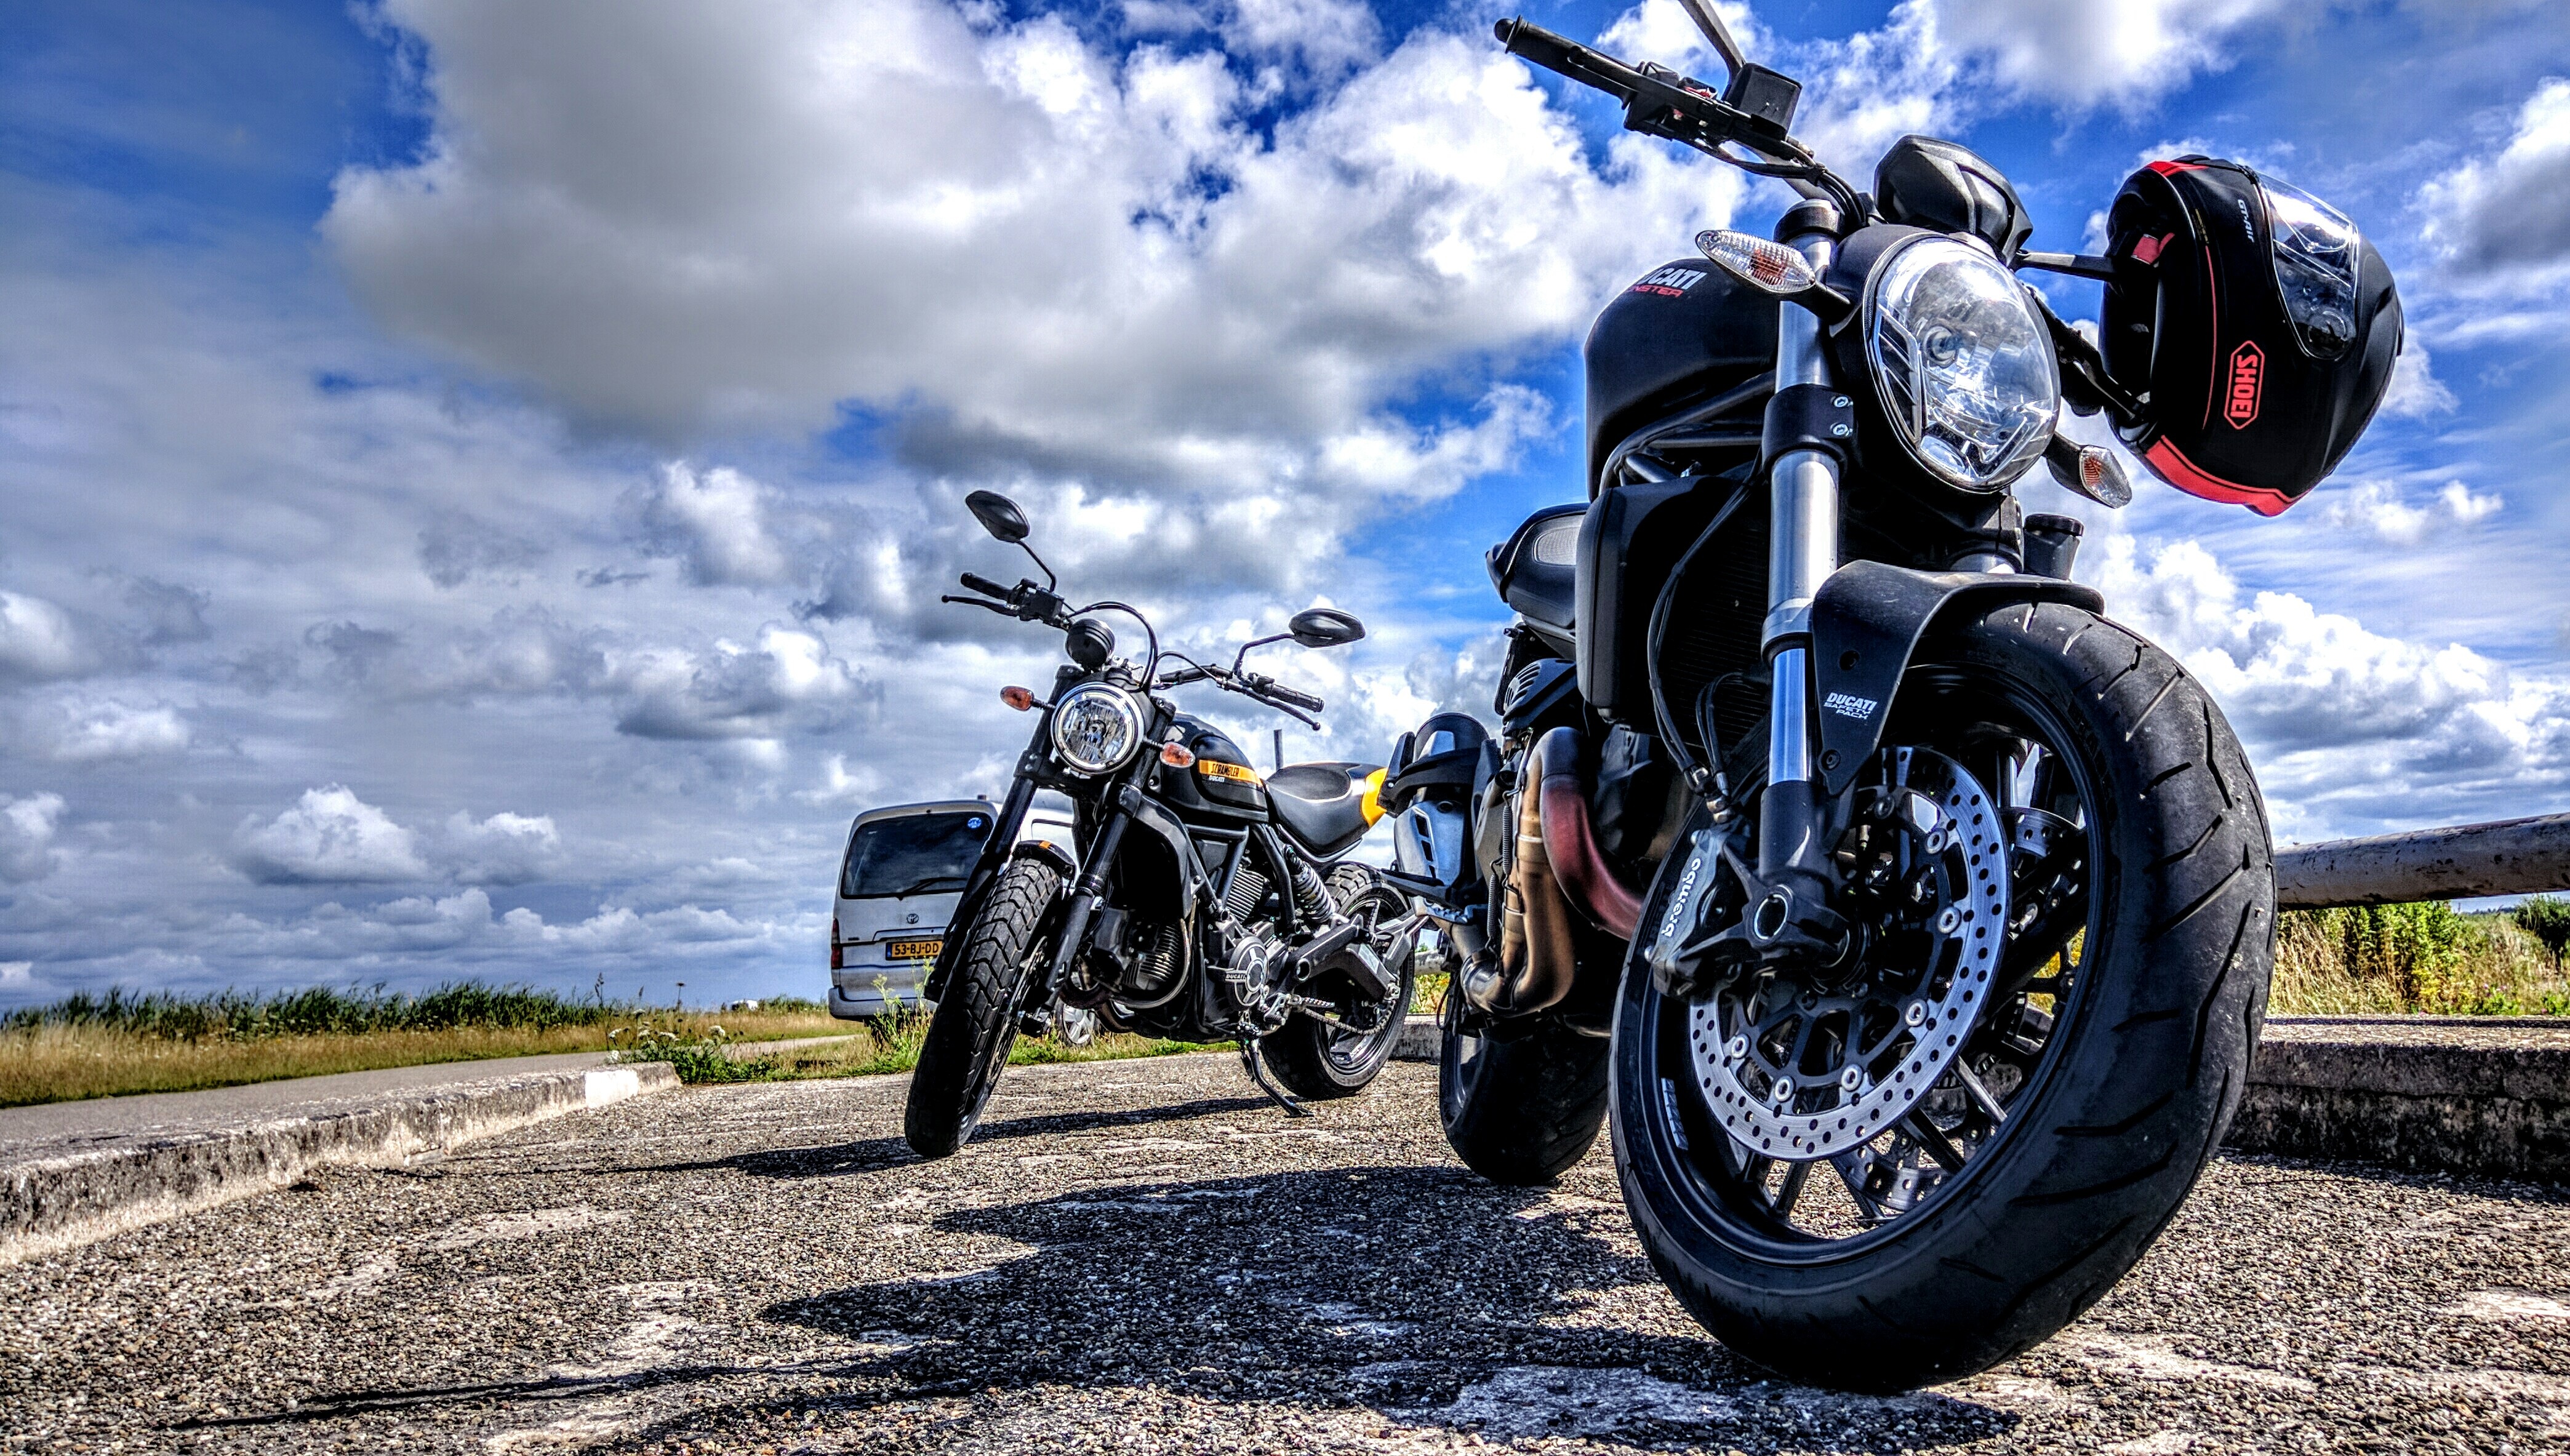 139922 скачать картинку мотоциклы, дукати (ducati), шлем, мотоцикл, байк, мотоспорт - обои и заставки бесплатно